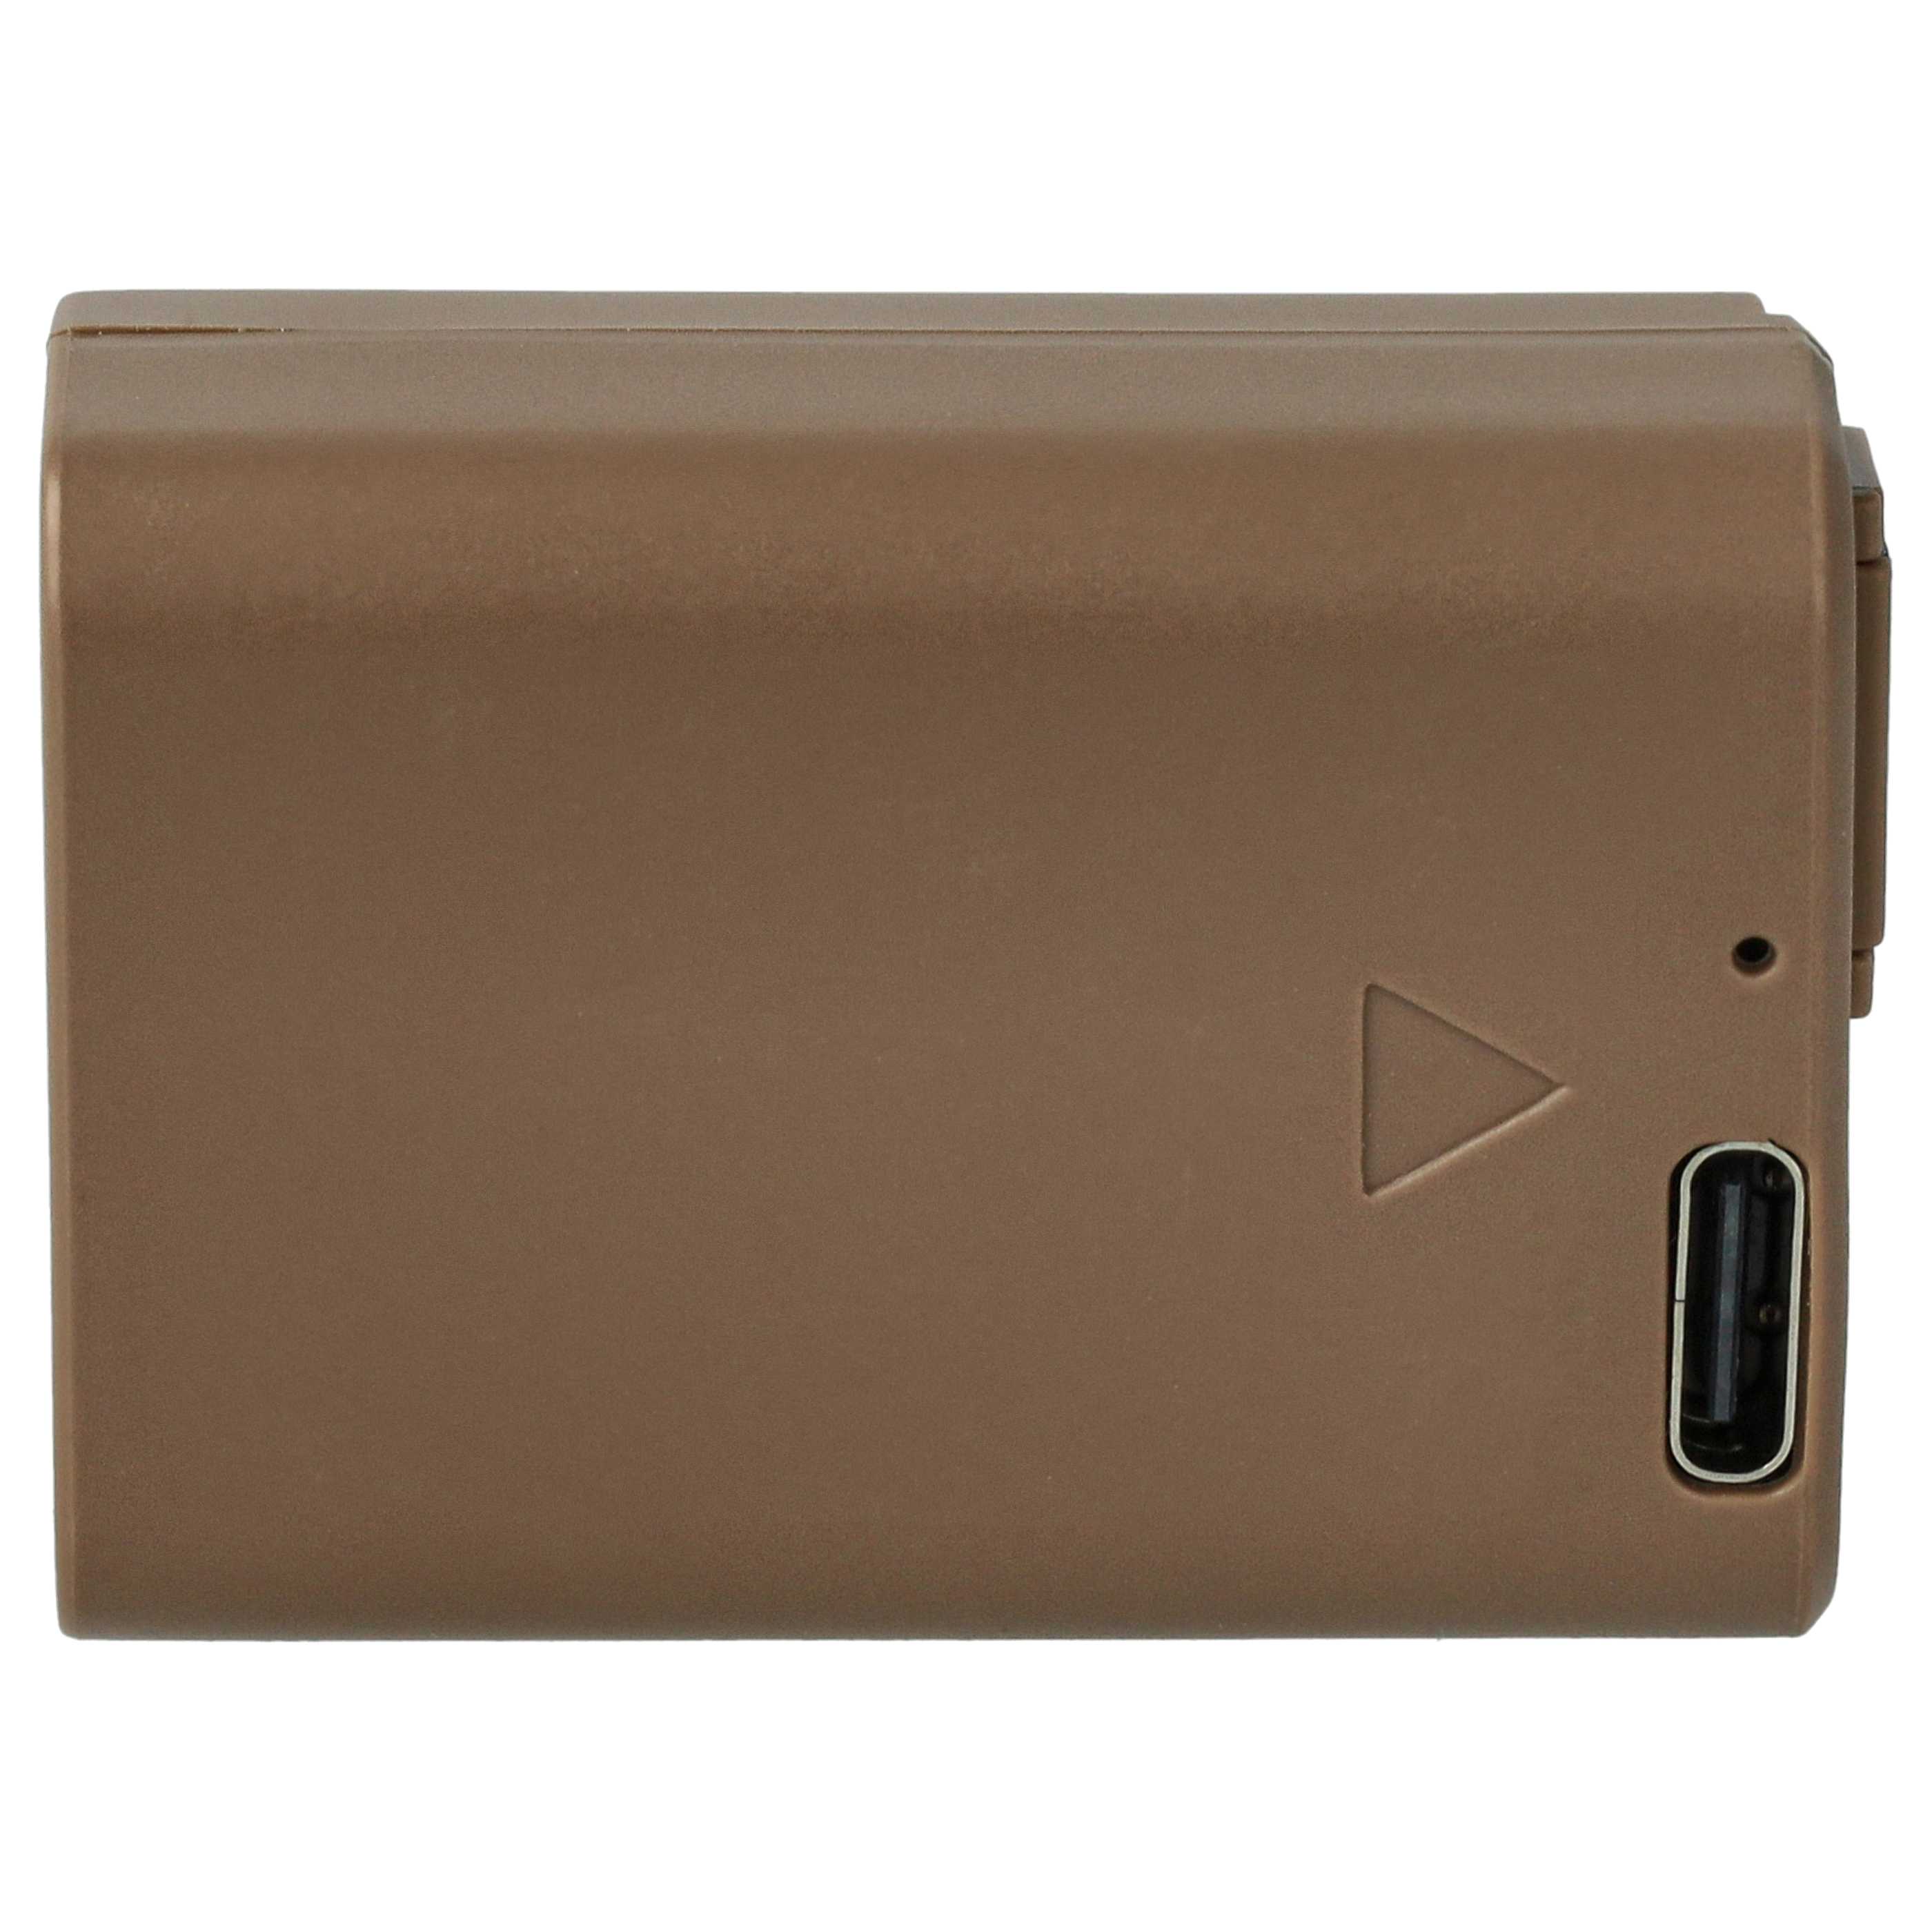 Batería reemplaza Sony NP-FW50 para cámara Sony - 900 mAh 7,4 V Li-Ion con chip, con clavija (h) USB C